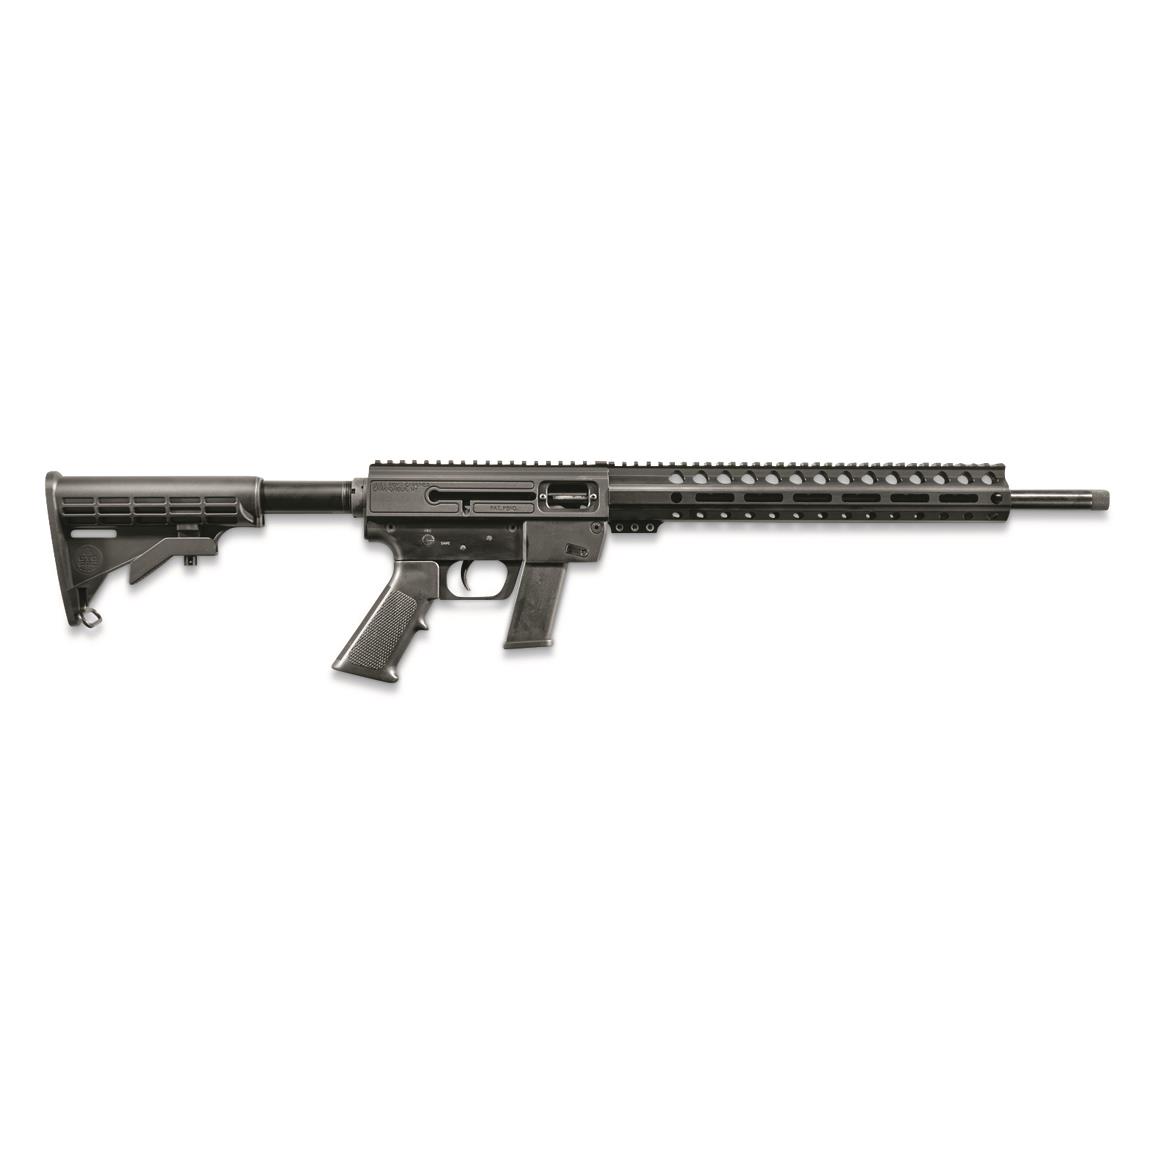 JRC Gen3 Pistol-caliber Carbine, Semi-automatic, .45 ACP, 17" Barrel, 13+1 Rds., Glock Mags